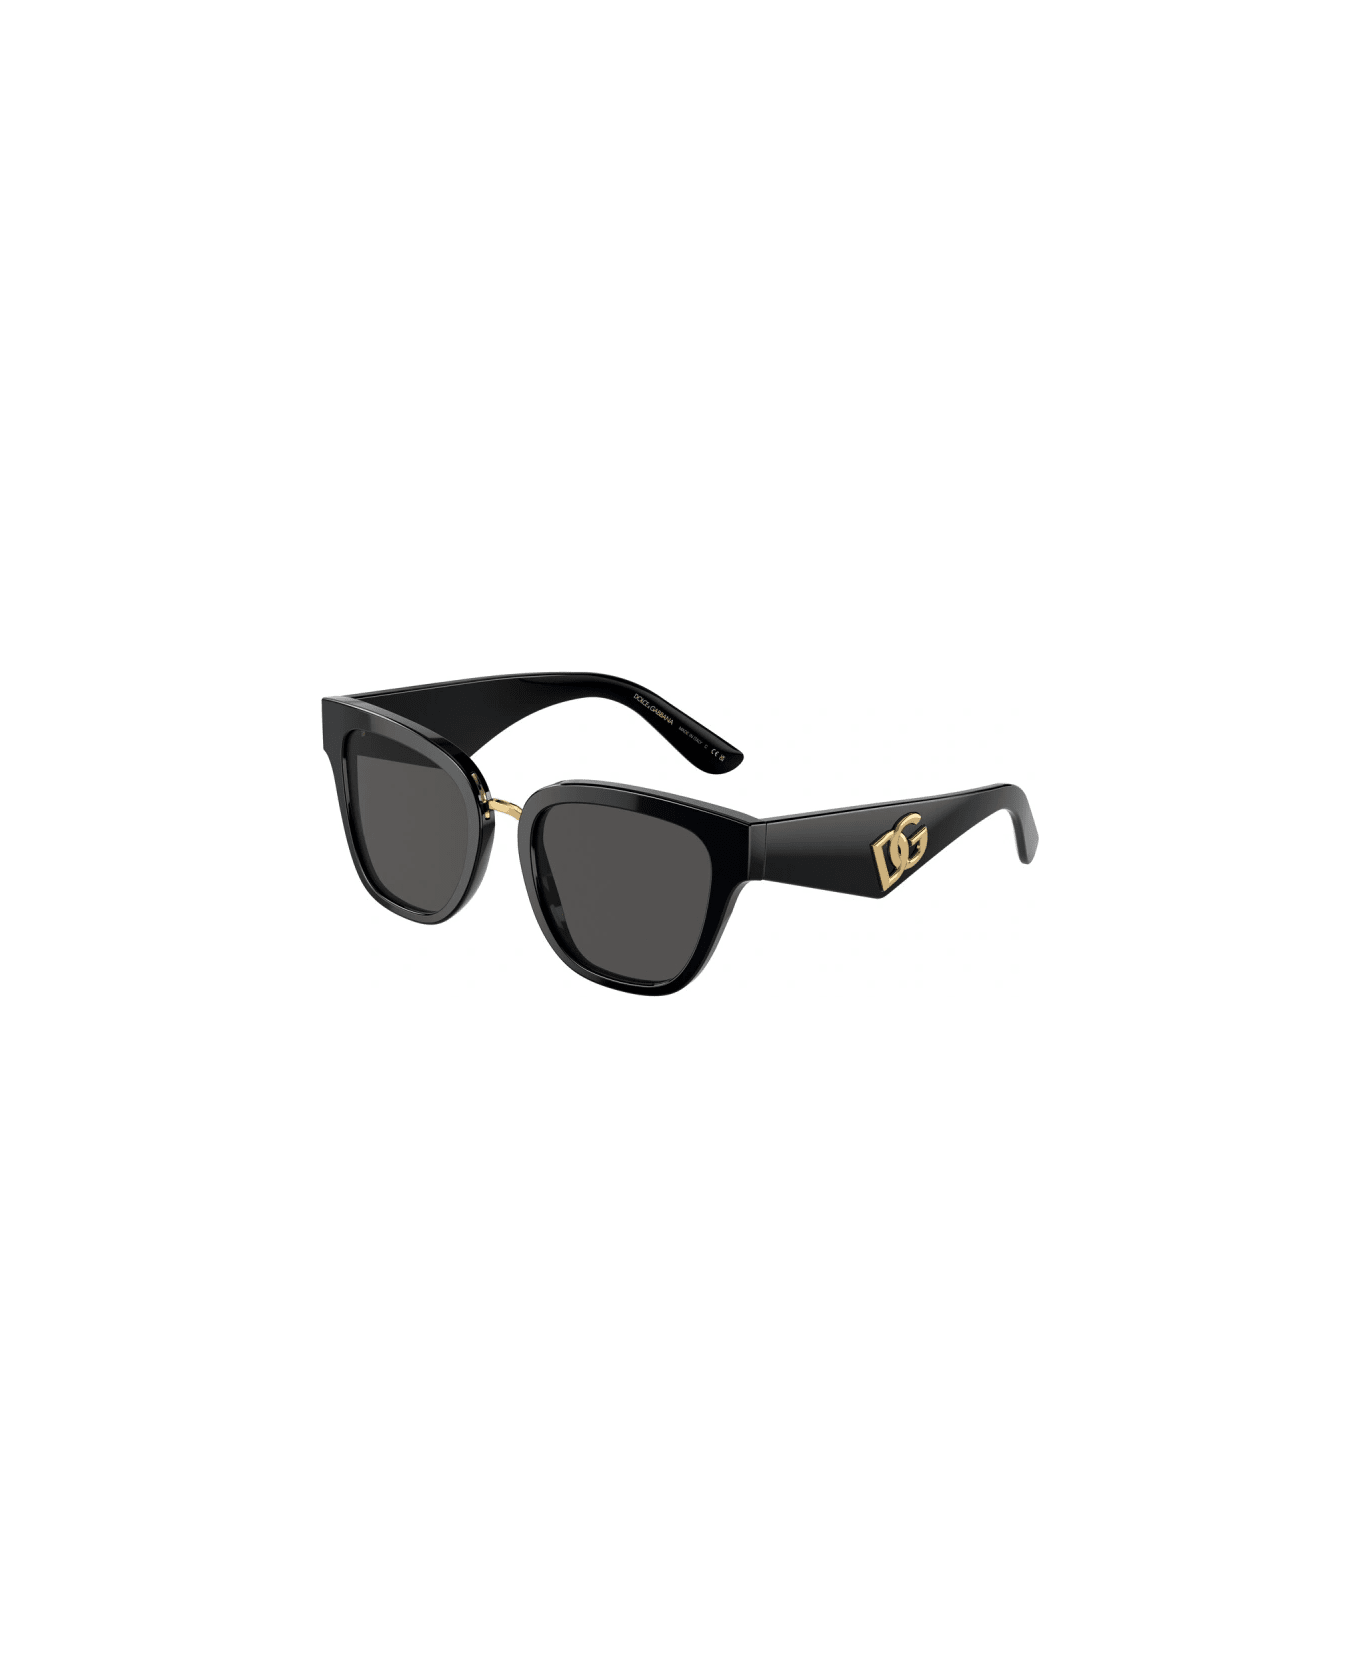 Dolce & Gabbana Eyewear DG4437s 501/87 Sunglasses